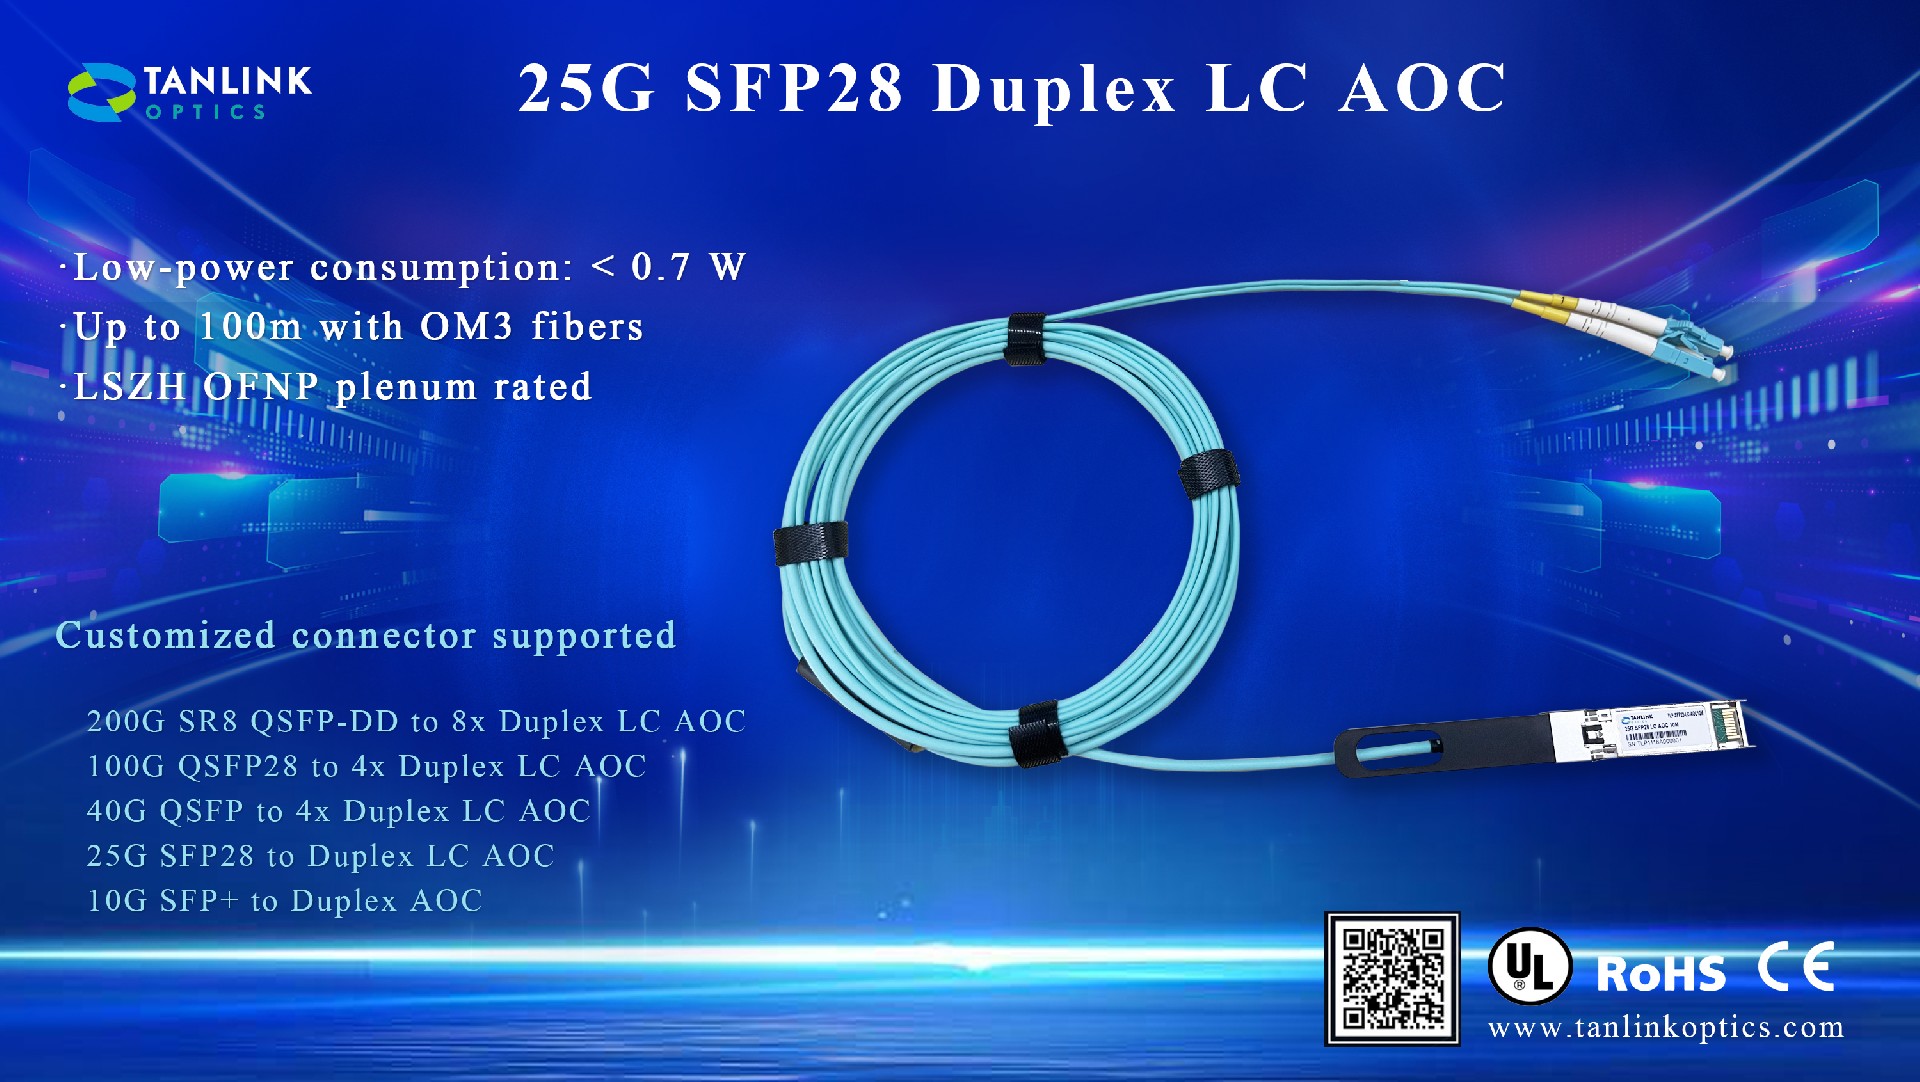 25G SFP28 Duplex LC AOC 图册.jpg